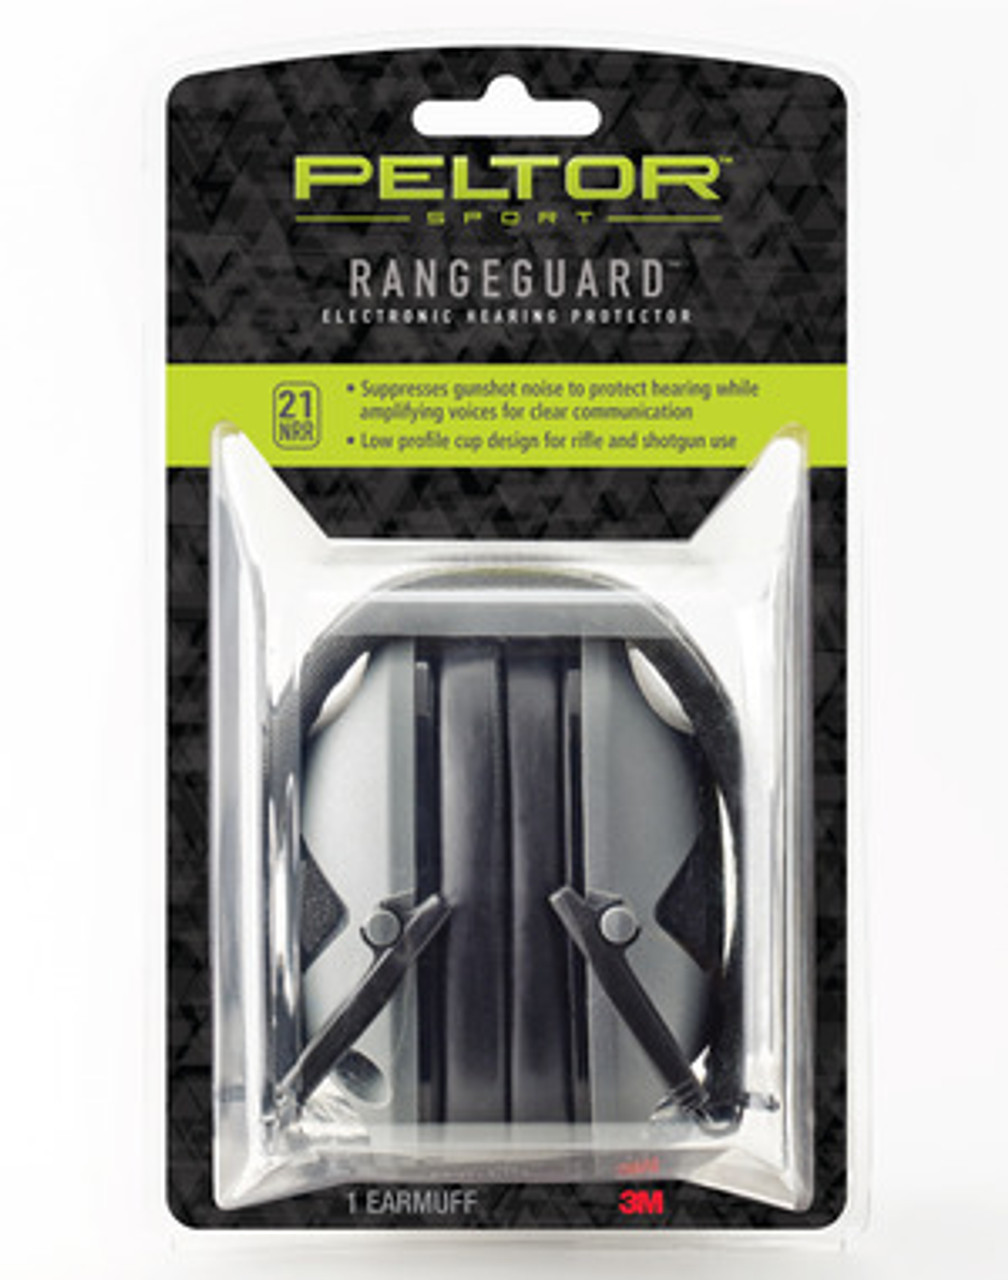 3M RG-OTH-1-W Peltor Sport RangeGuard Earmuff Industrial Safety Products